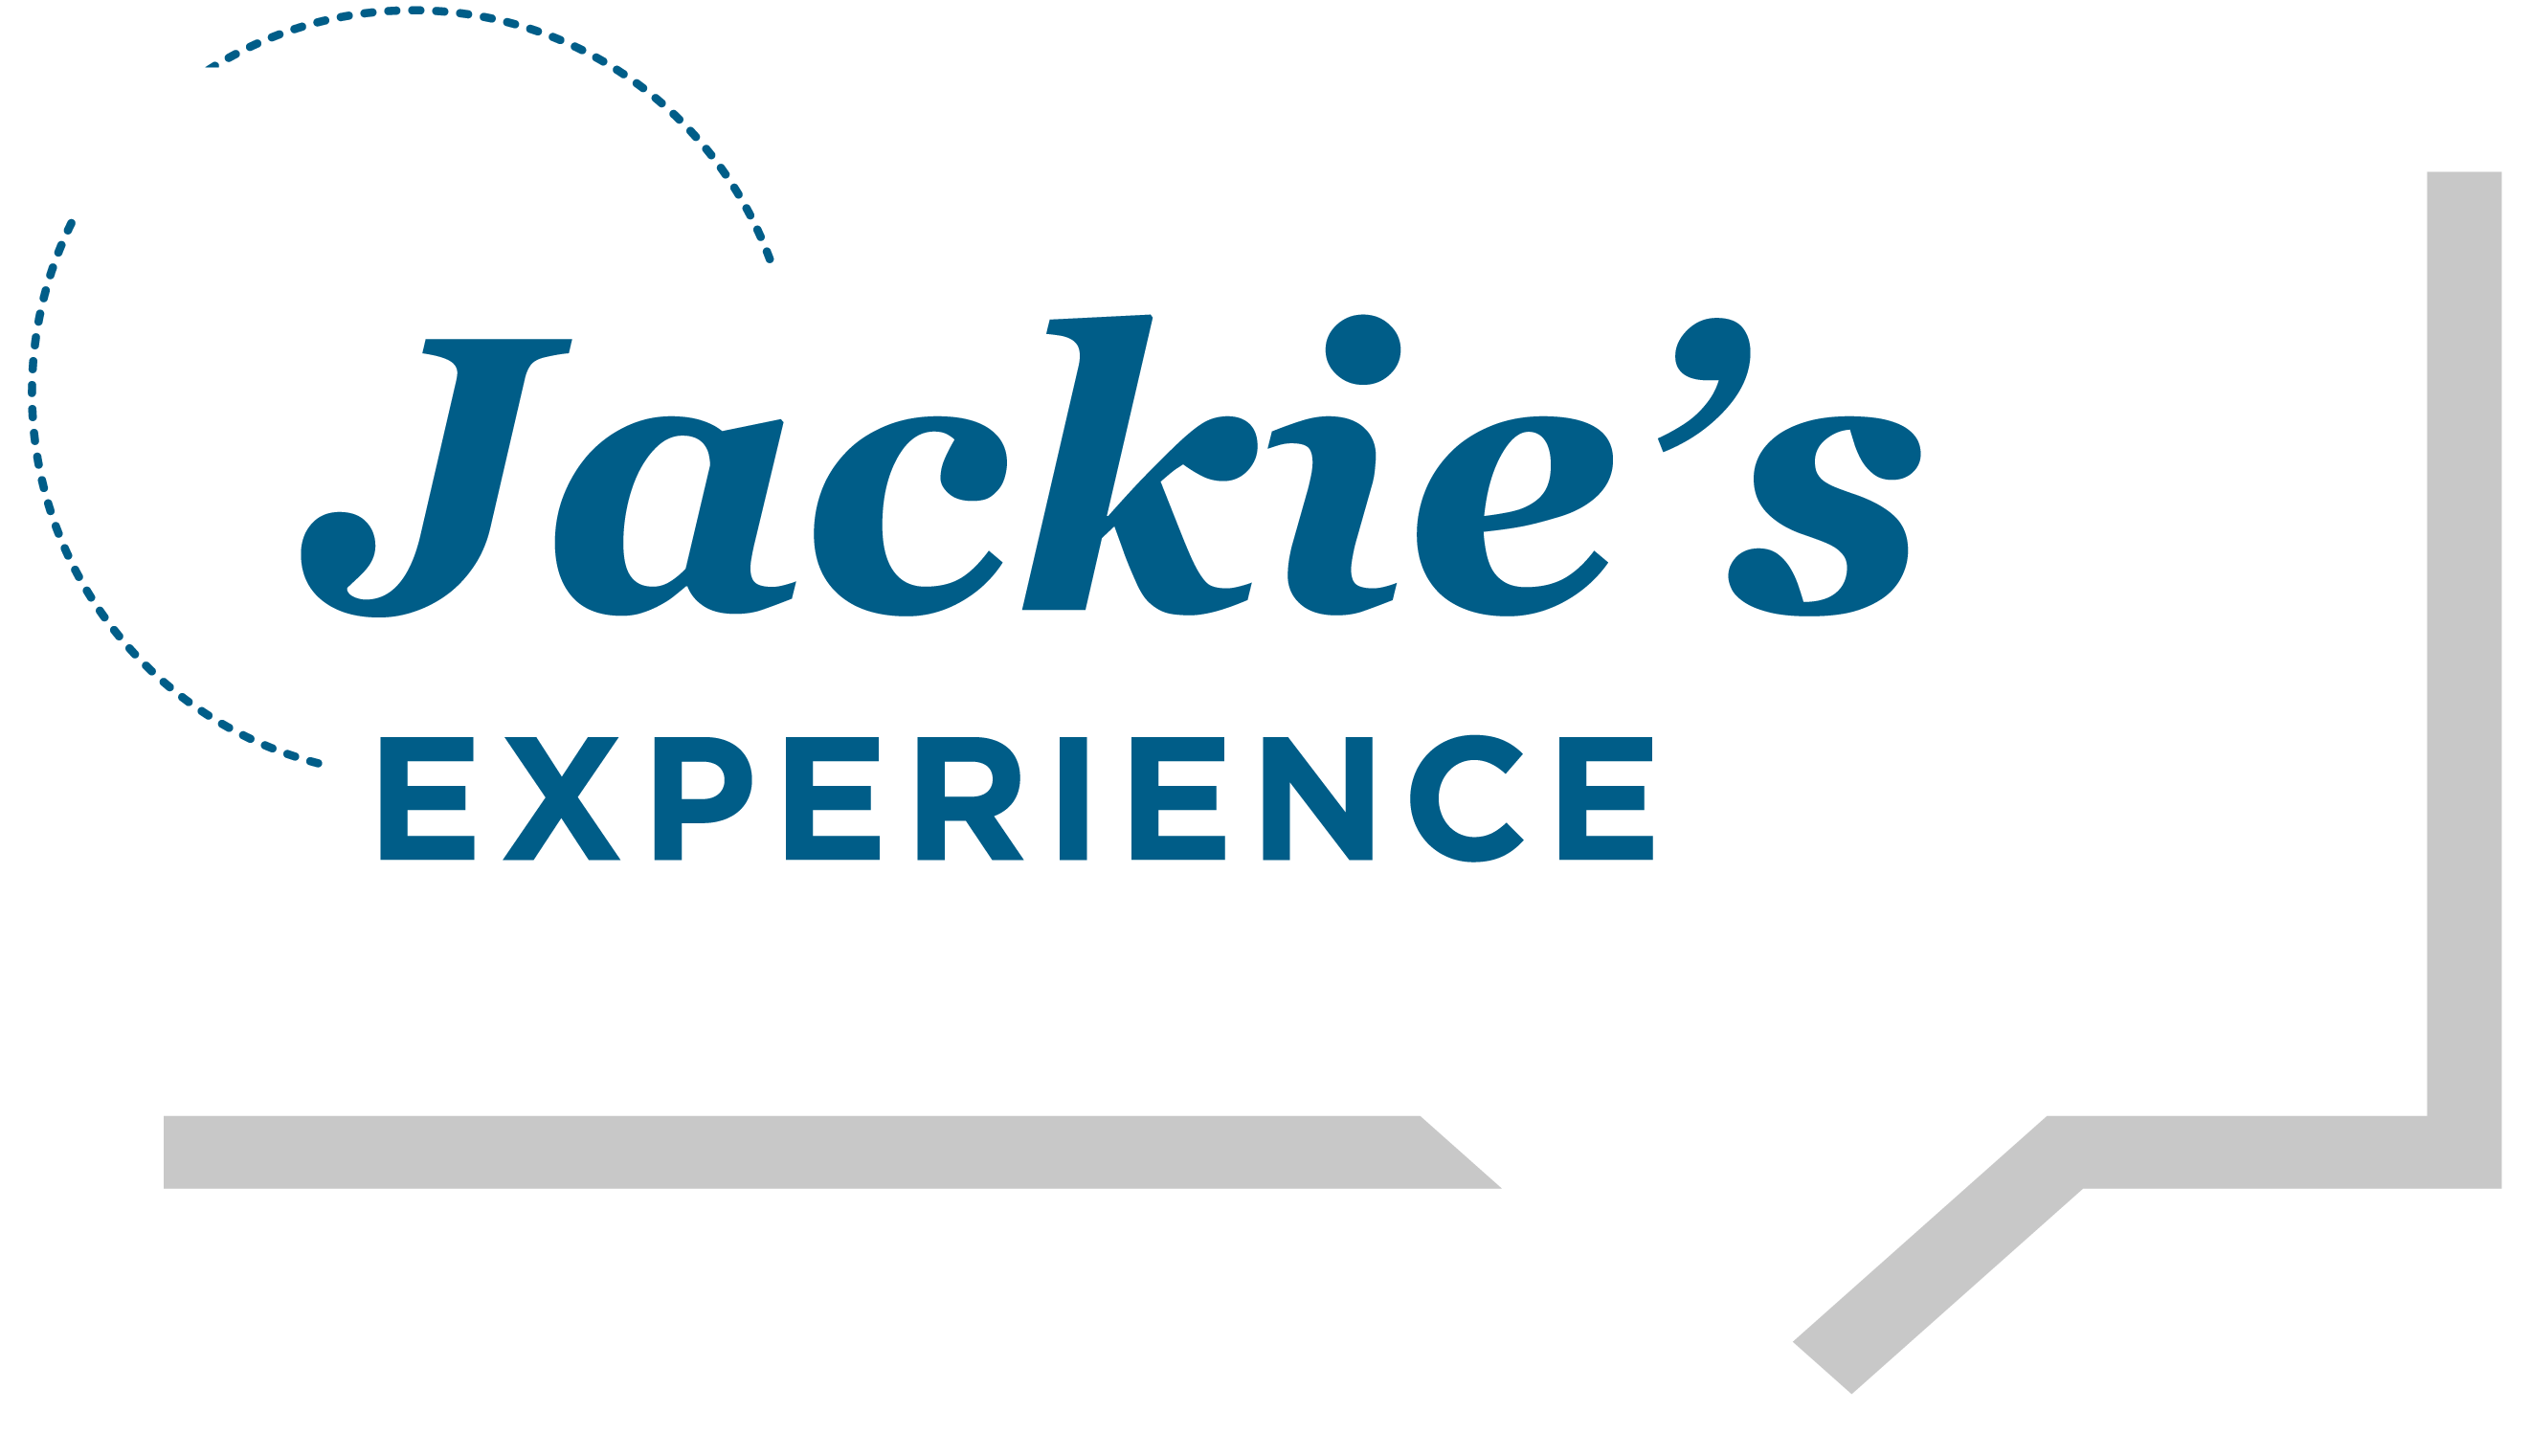 Jackie's Experience